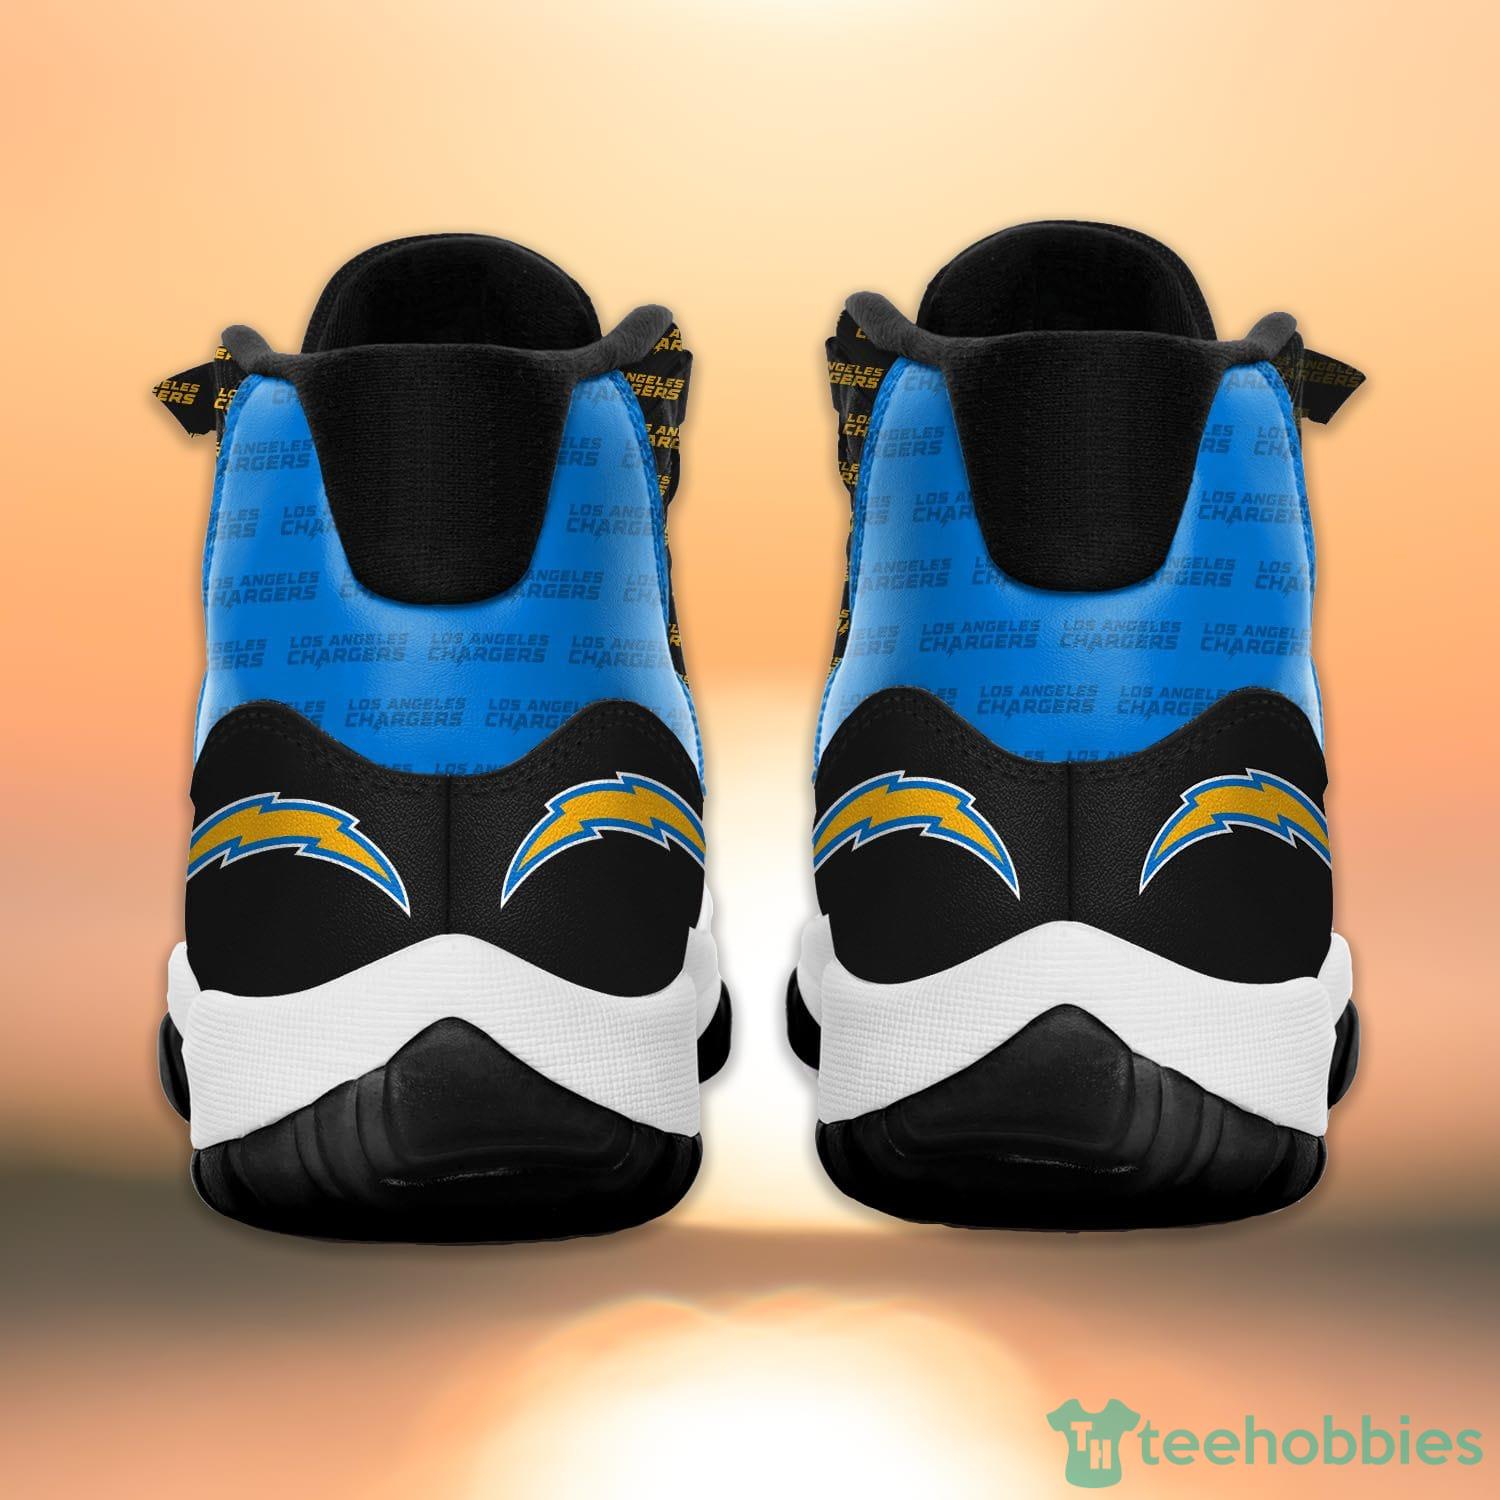 Los Angeles Chargers Custom Name Air Jordan 11 Sneaker Shoes For Sport Fans  - Banantees